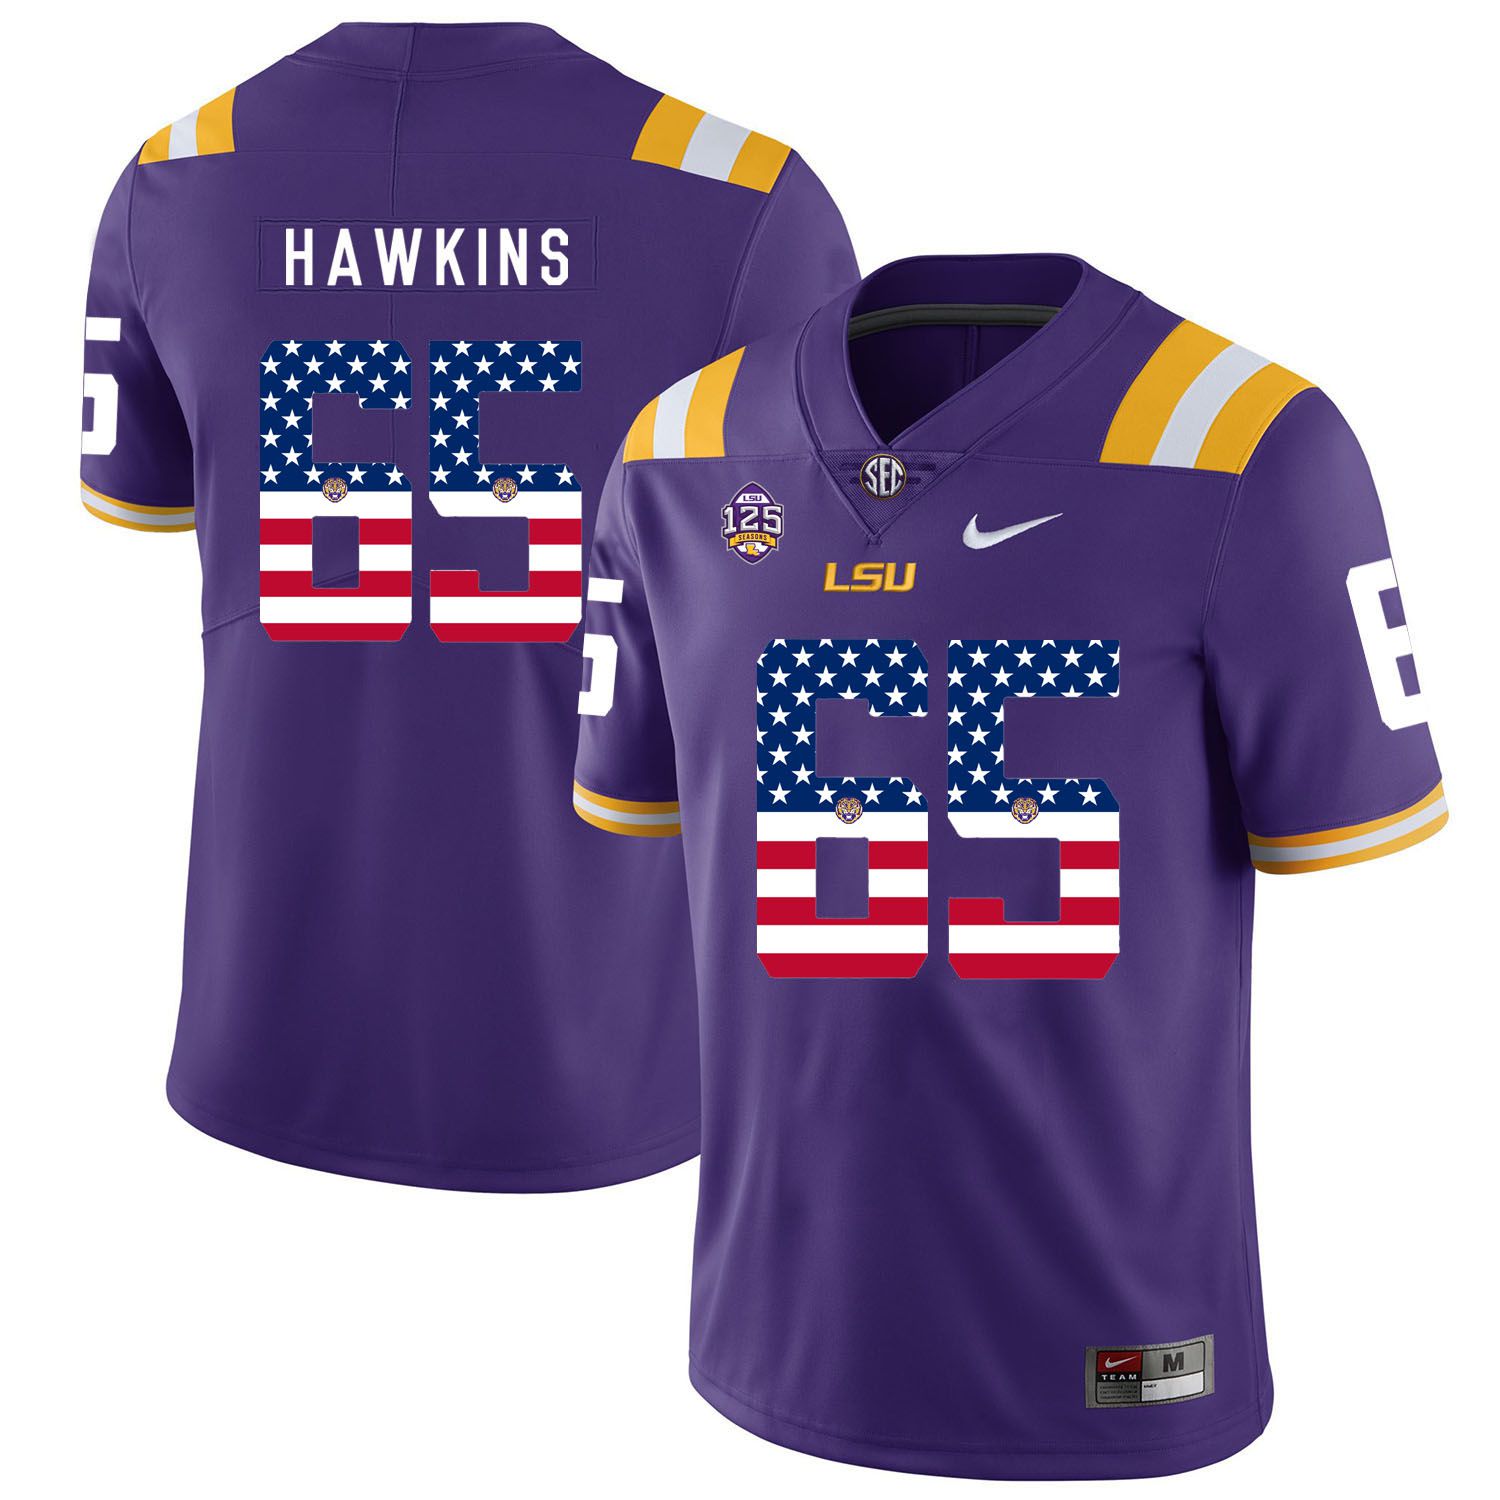 Men LSU Tigers #65 Hawkins Purple Flag Customized NCAA Jerseys